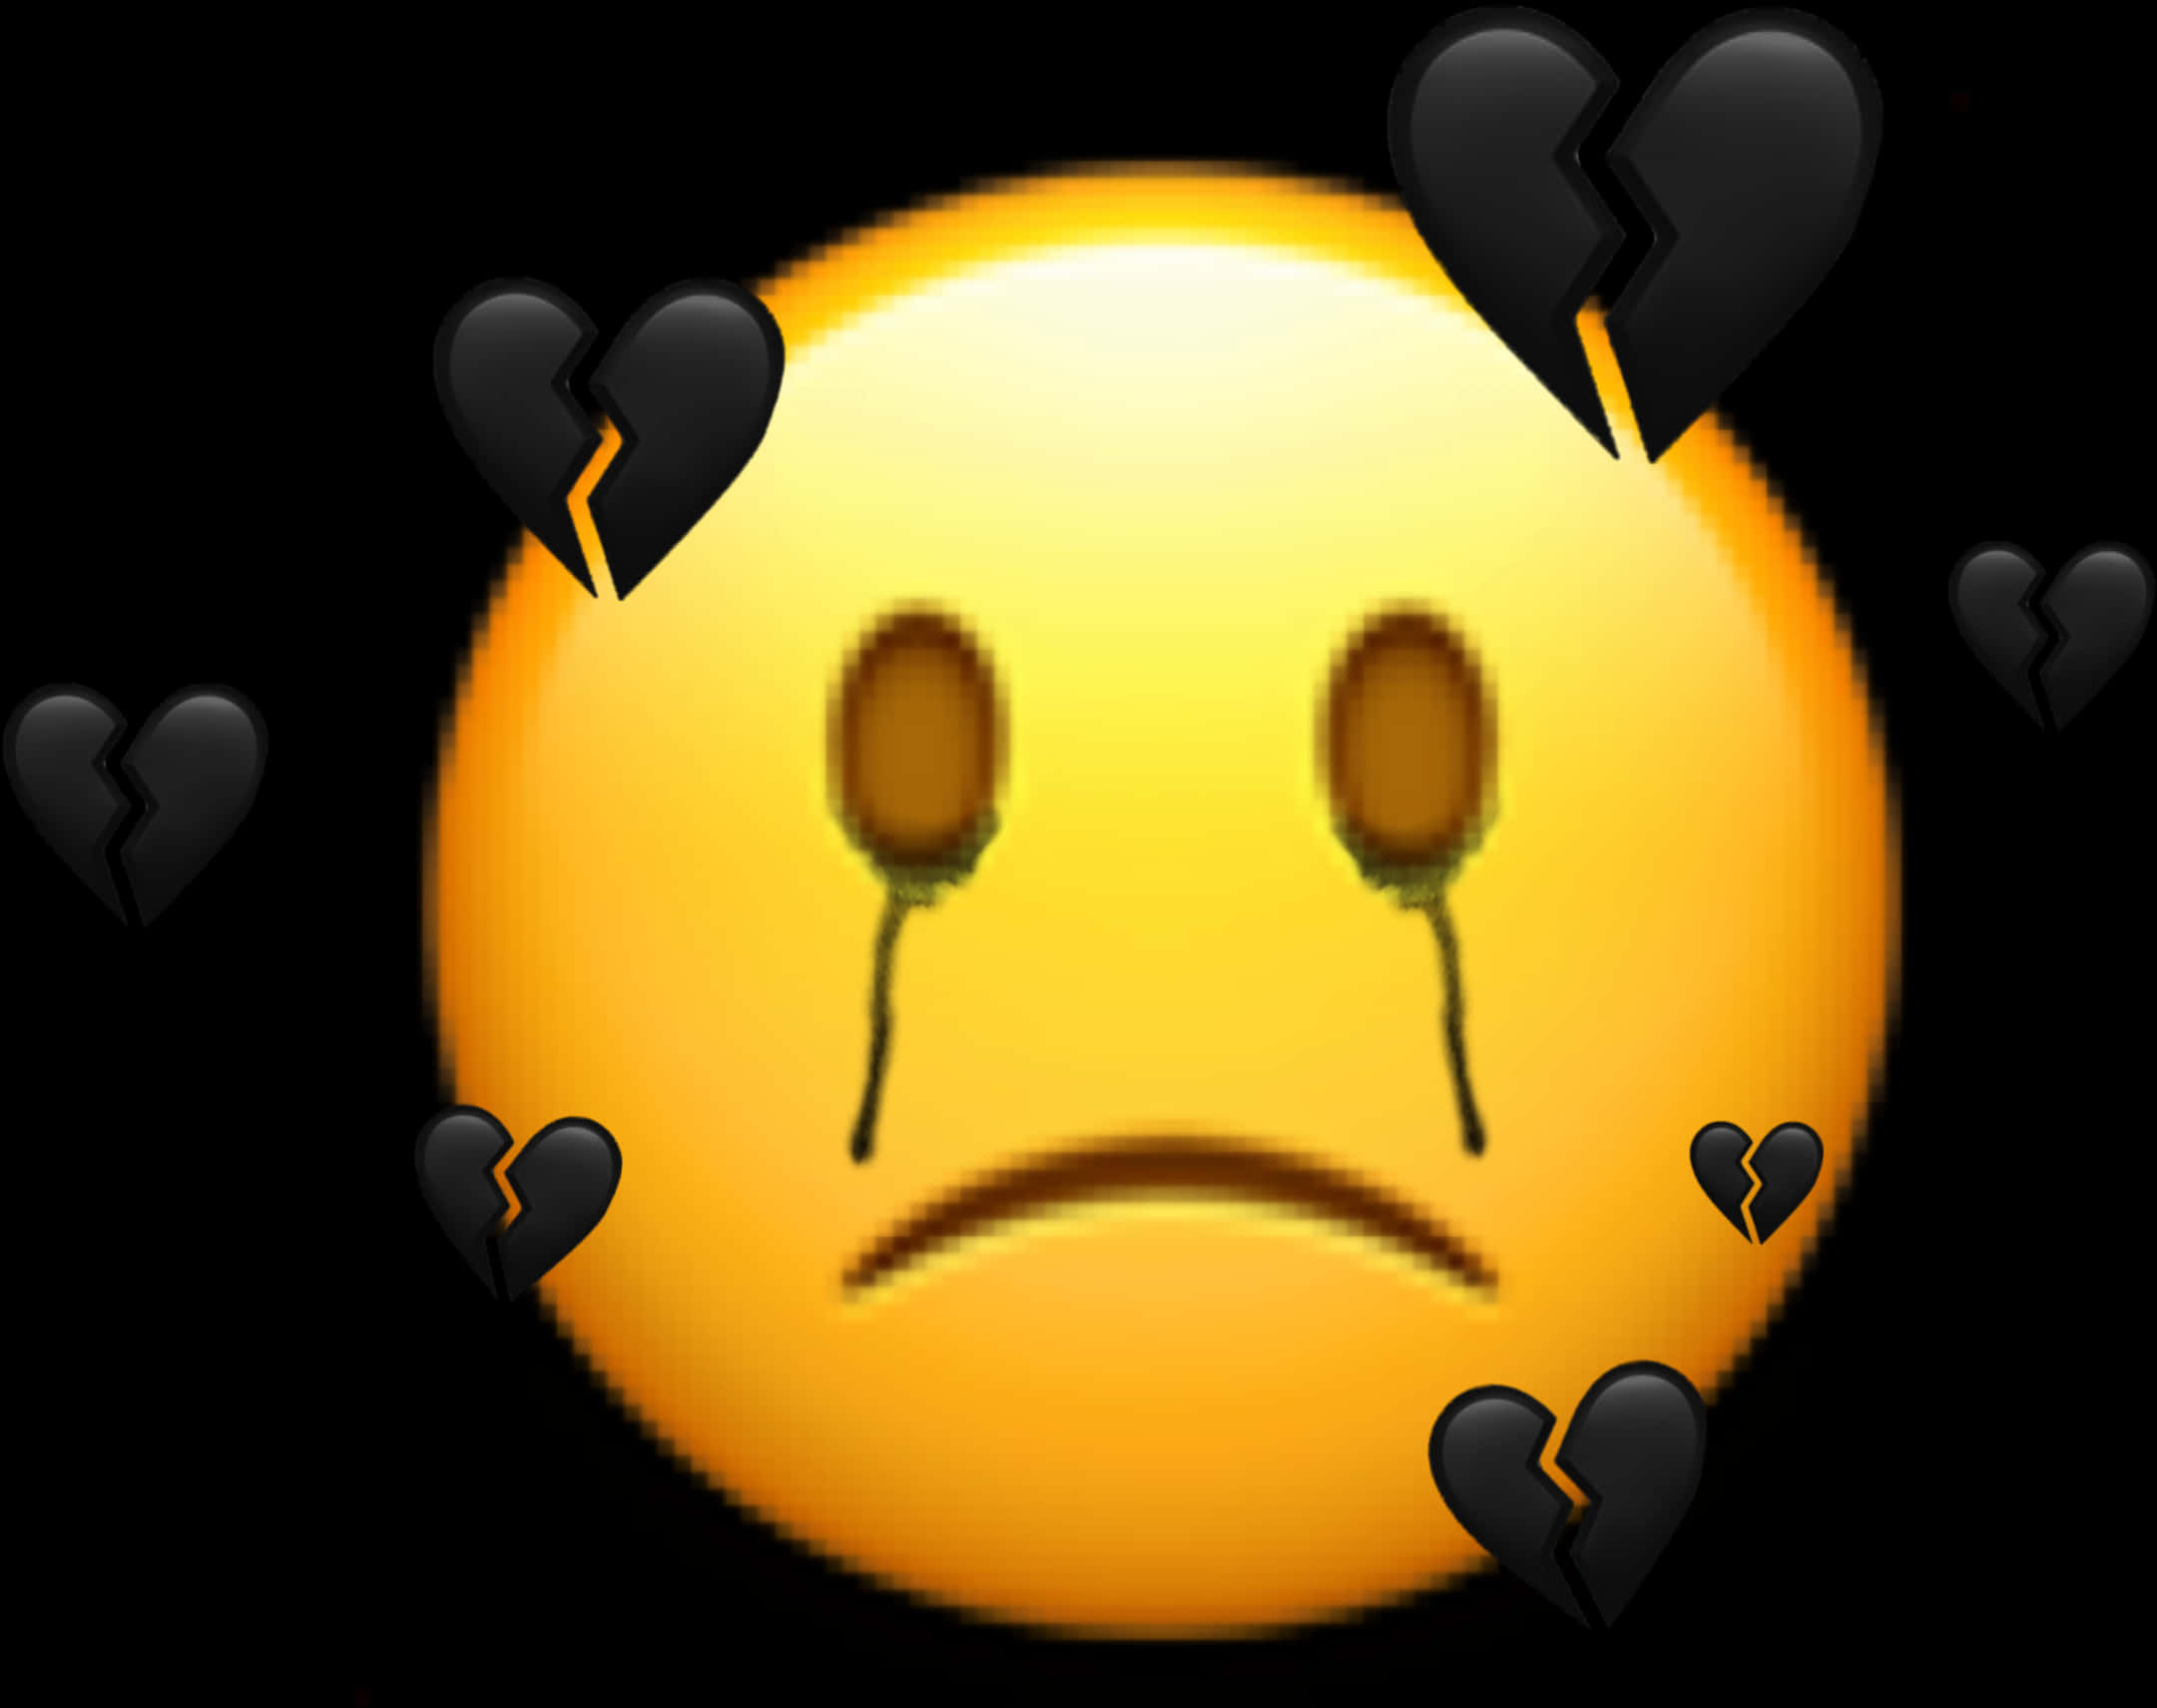 Broken Heart Emoji Surroundedby Black Hearts PNG image